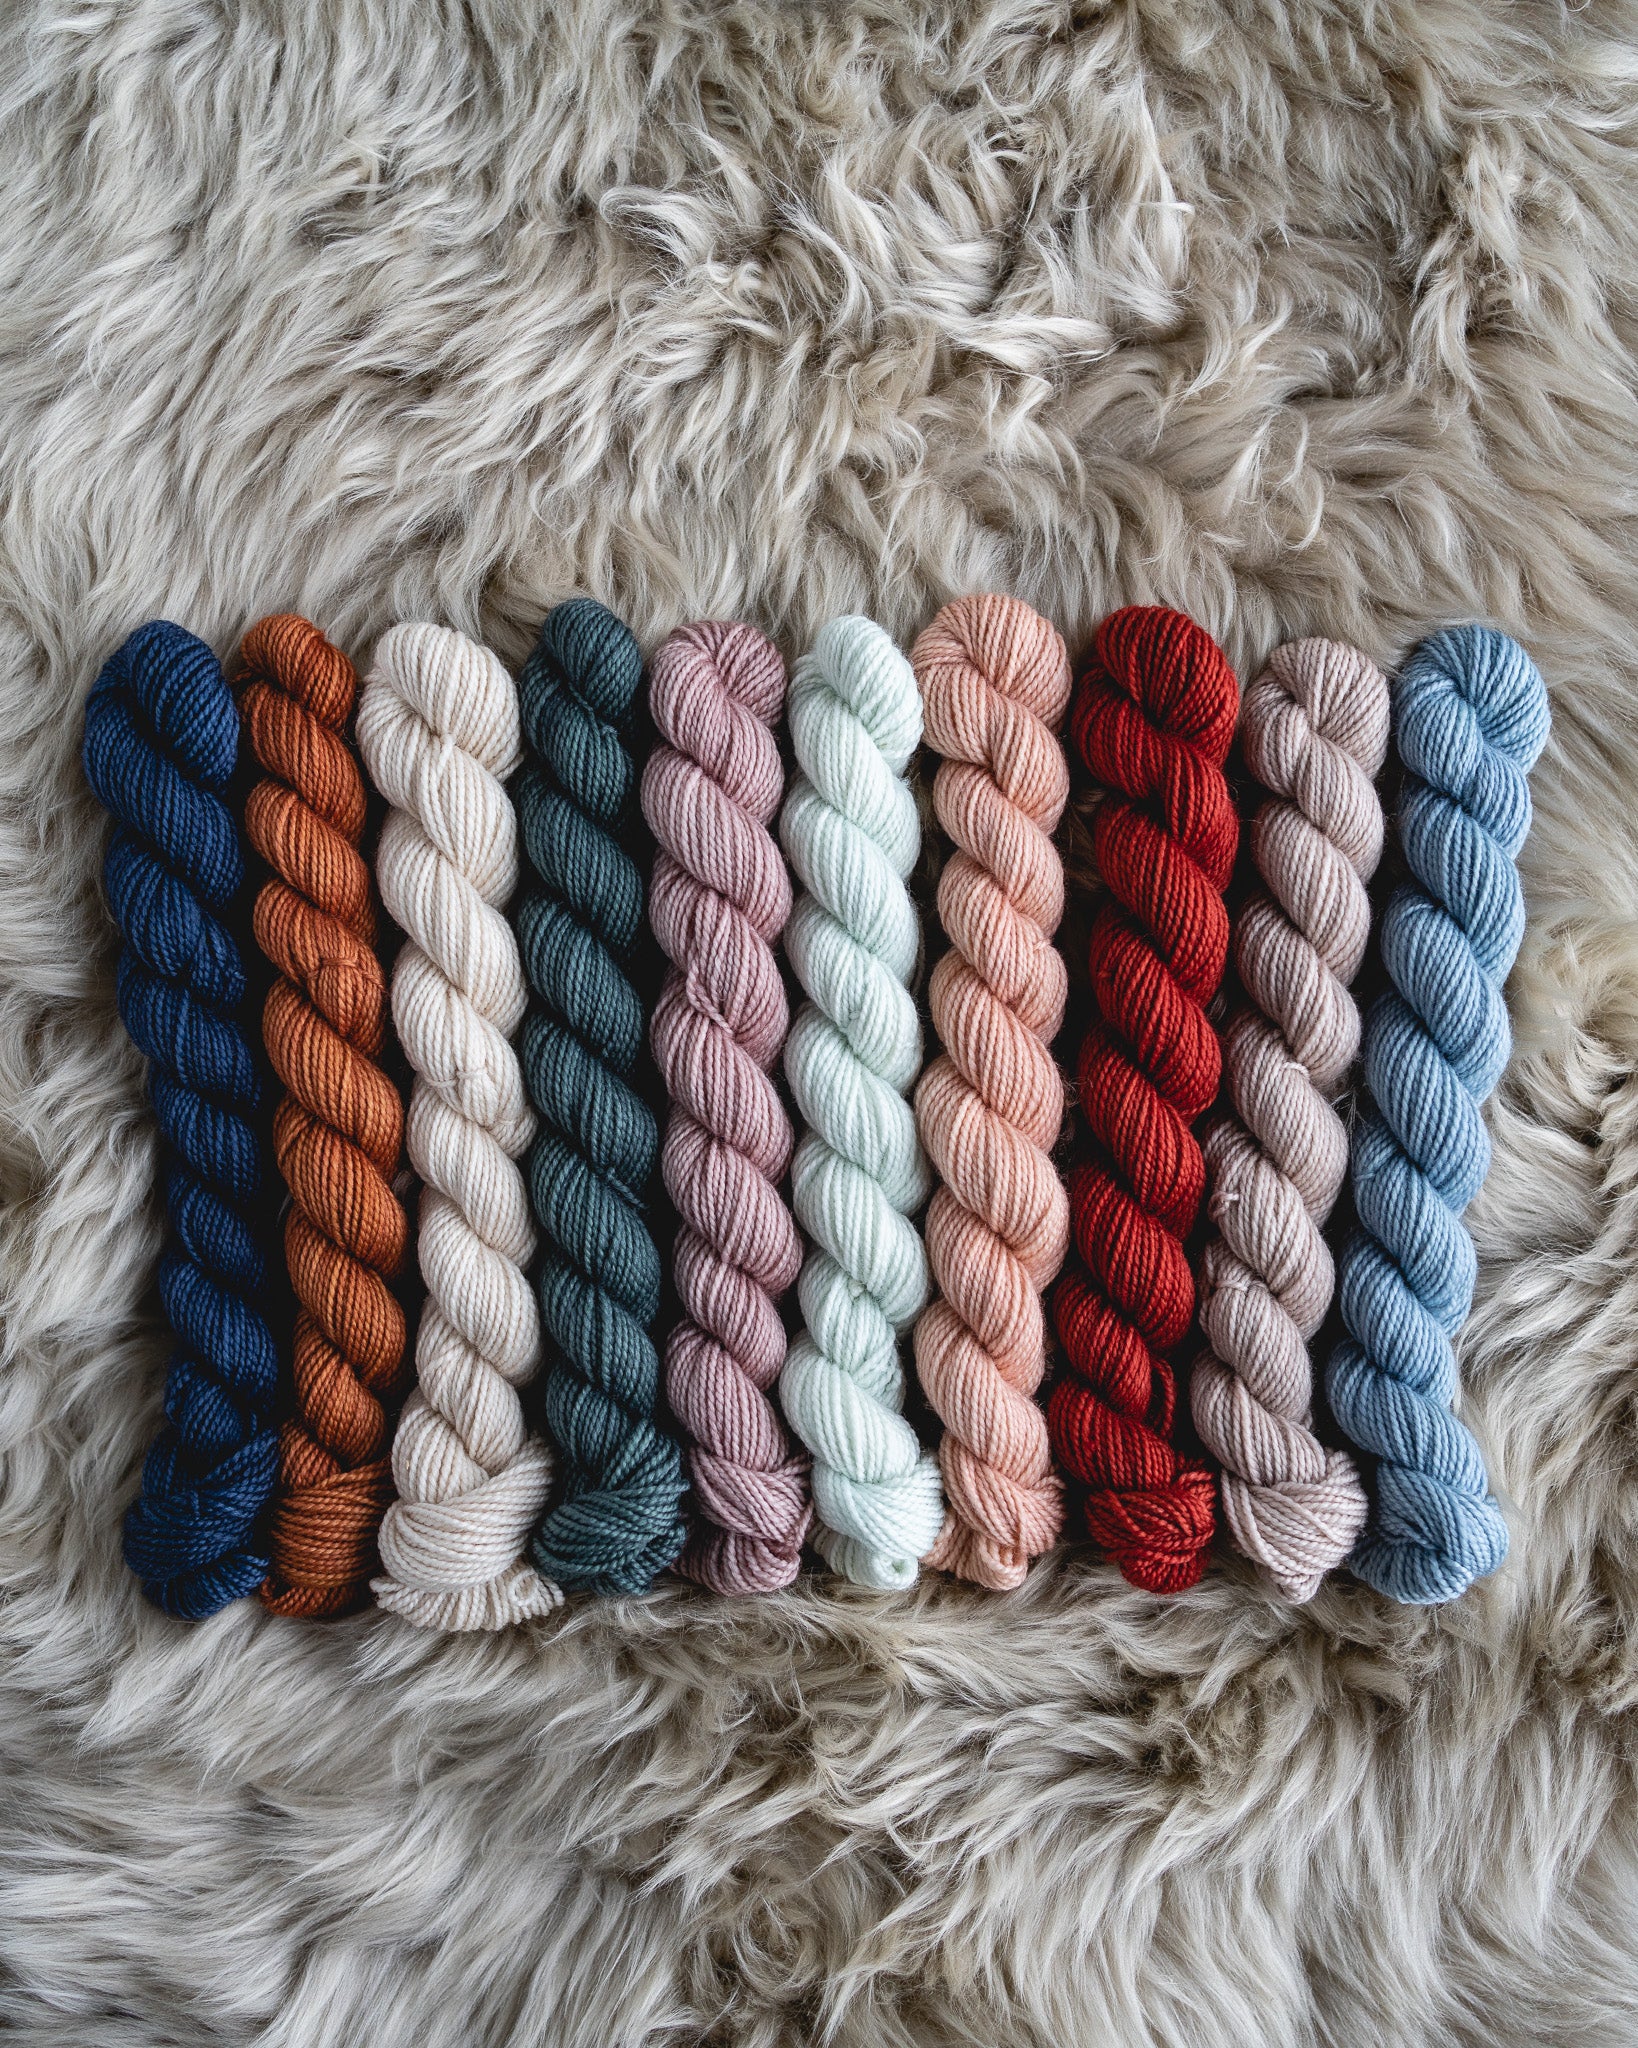 12pcs Aluminum Crochet Hooks Set, Colorful Single Crochet Hook Set For  Sweater Knitting, Crochet Tools Kit For Diy Handicrafts